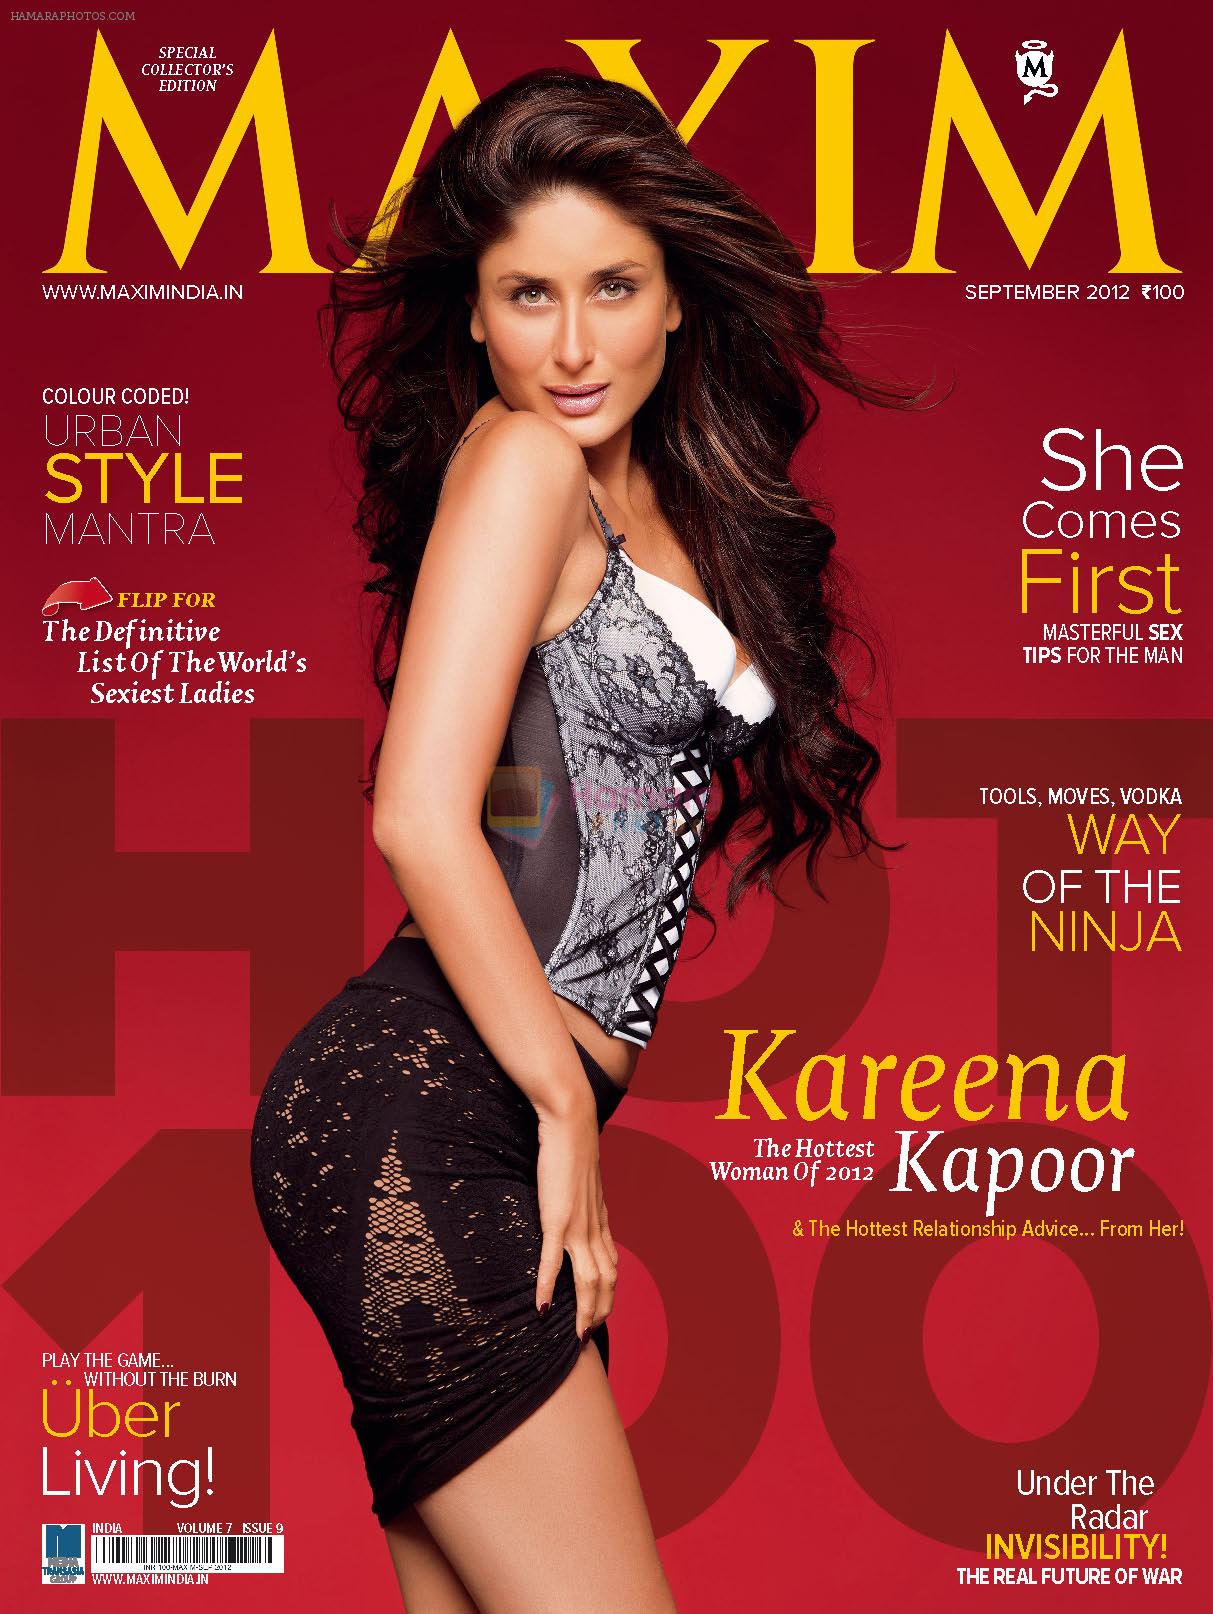 Kareena Kapoor 2012's Hottest Woman in the World